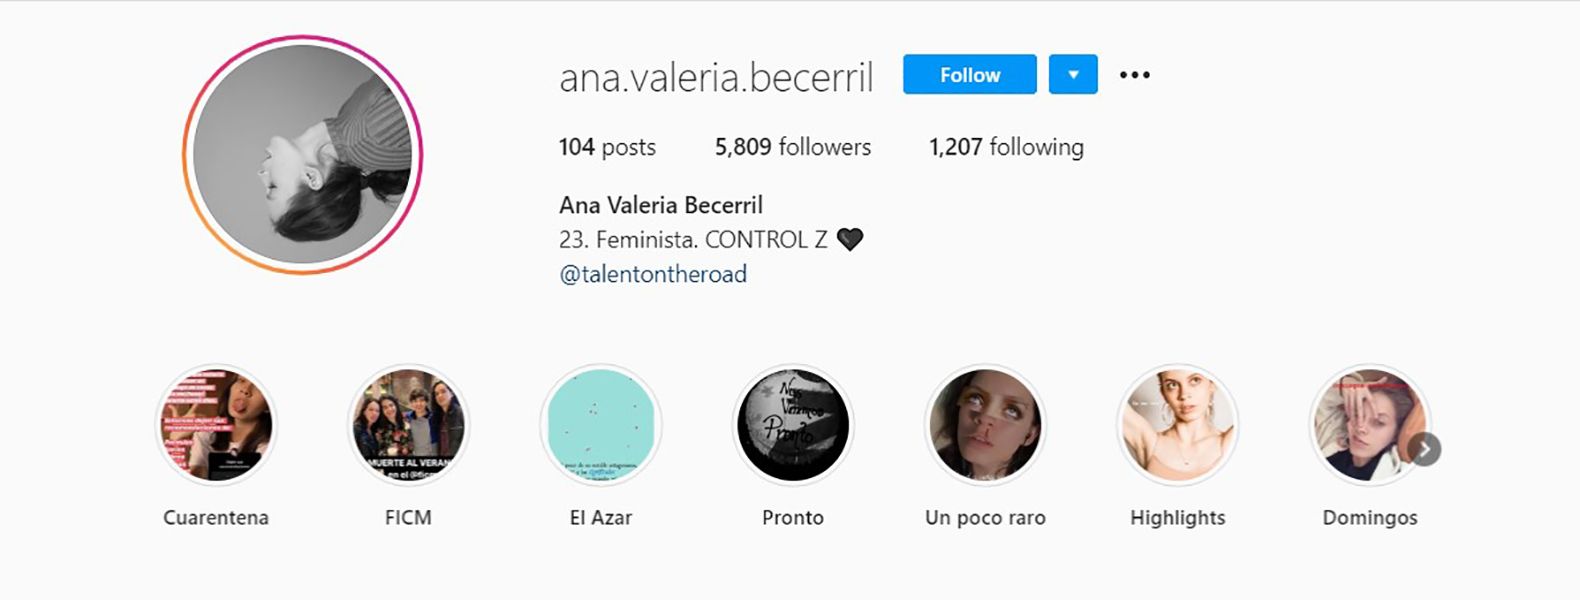 Instagram Bio of Ana Valeria Becerril Describing Herself as a Feminist